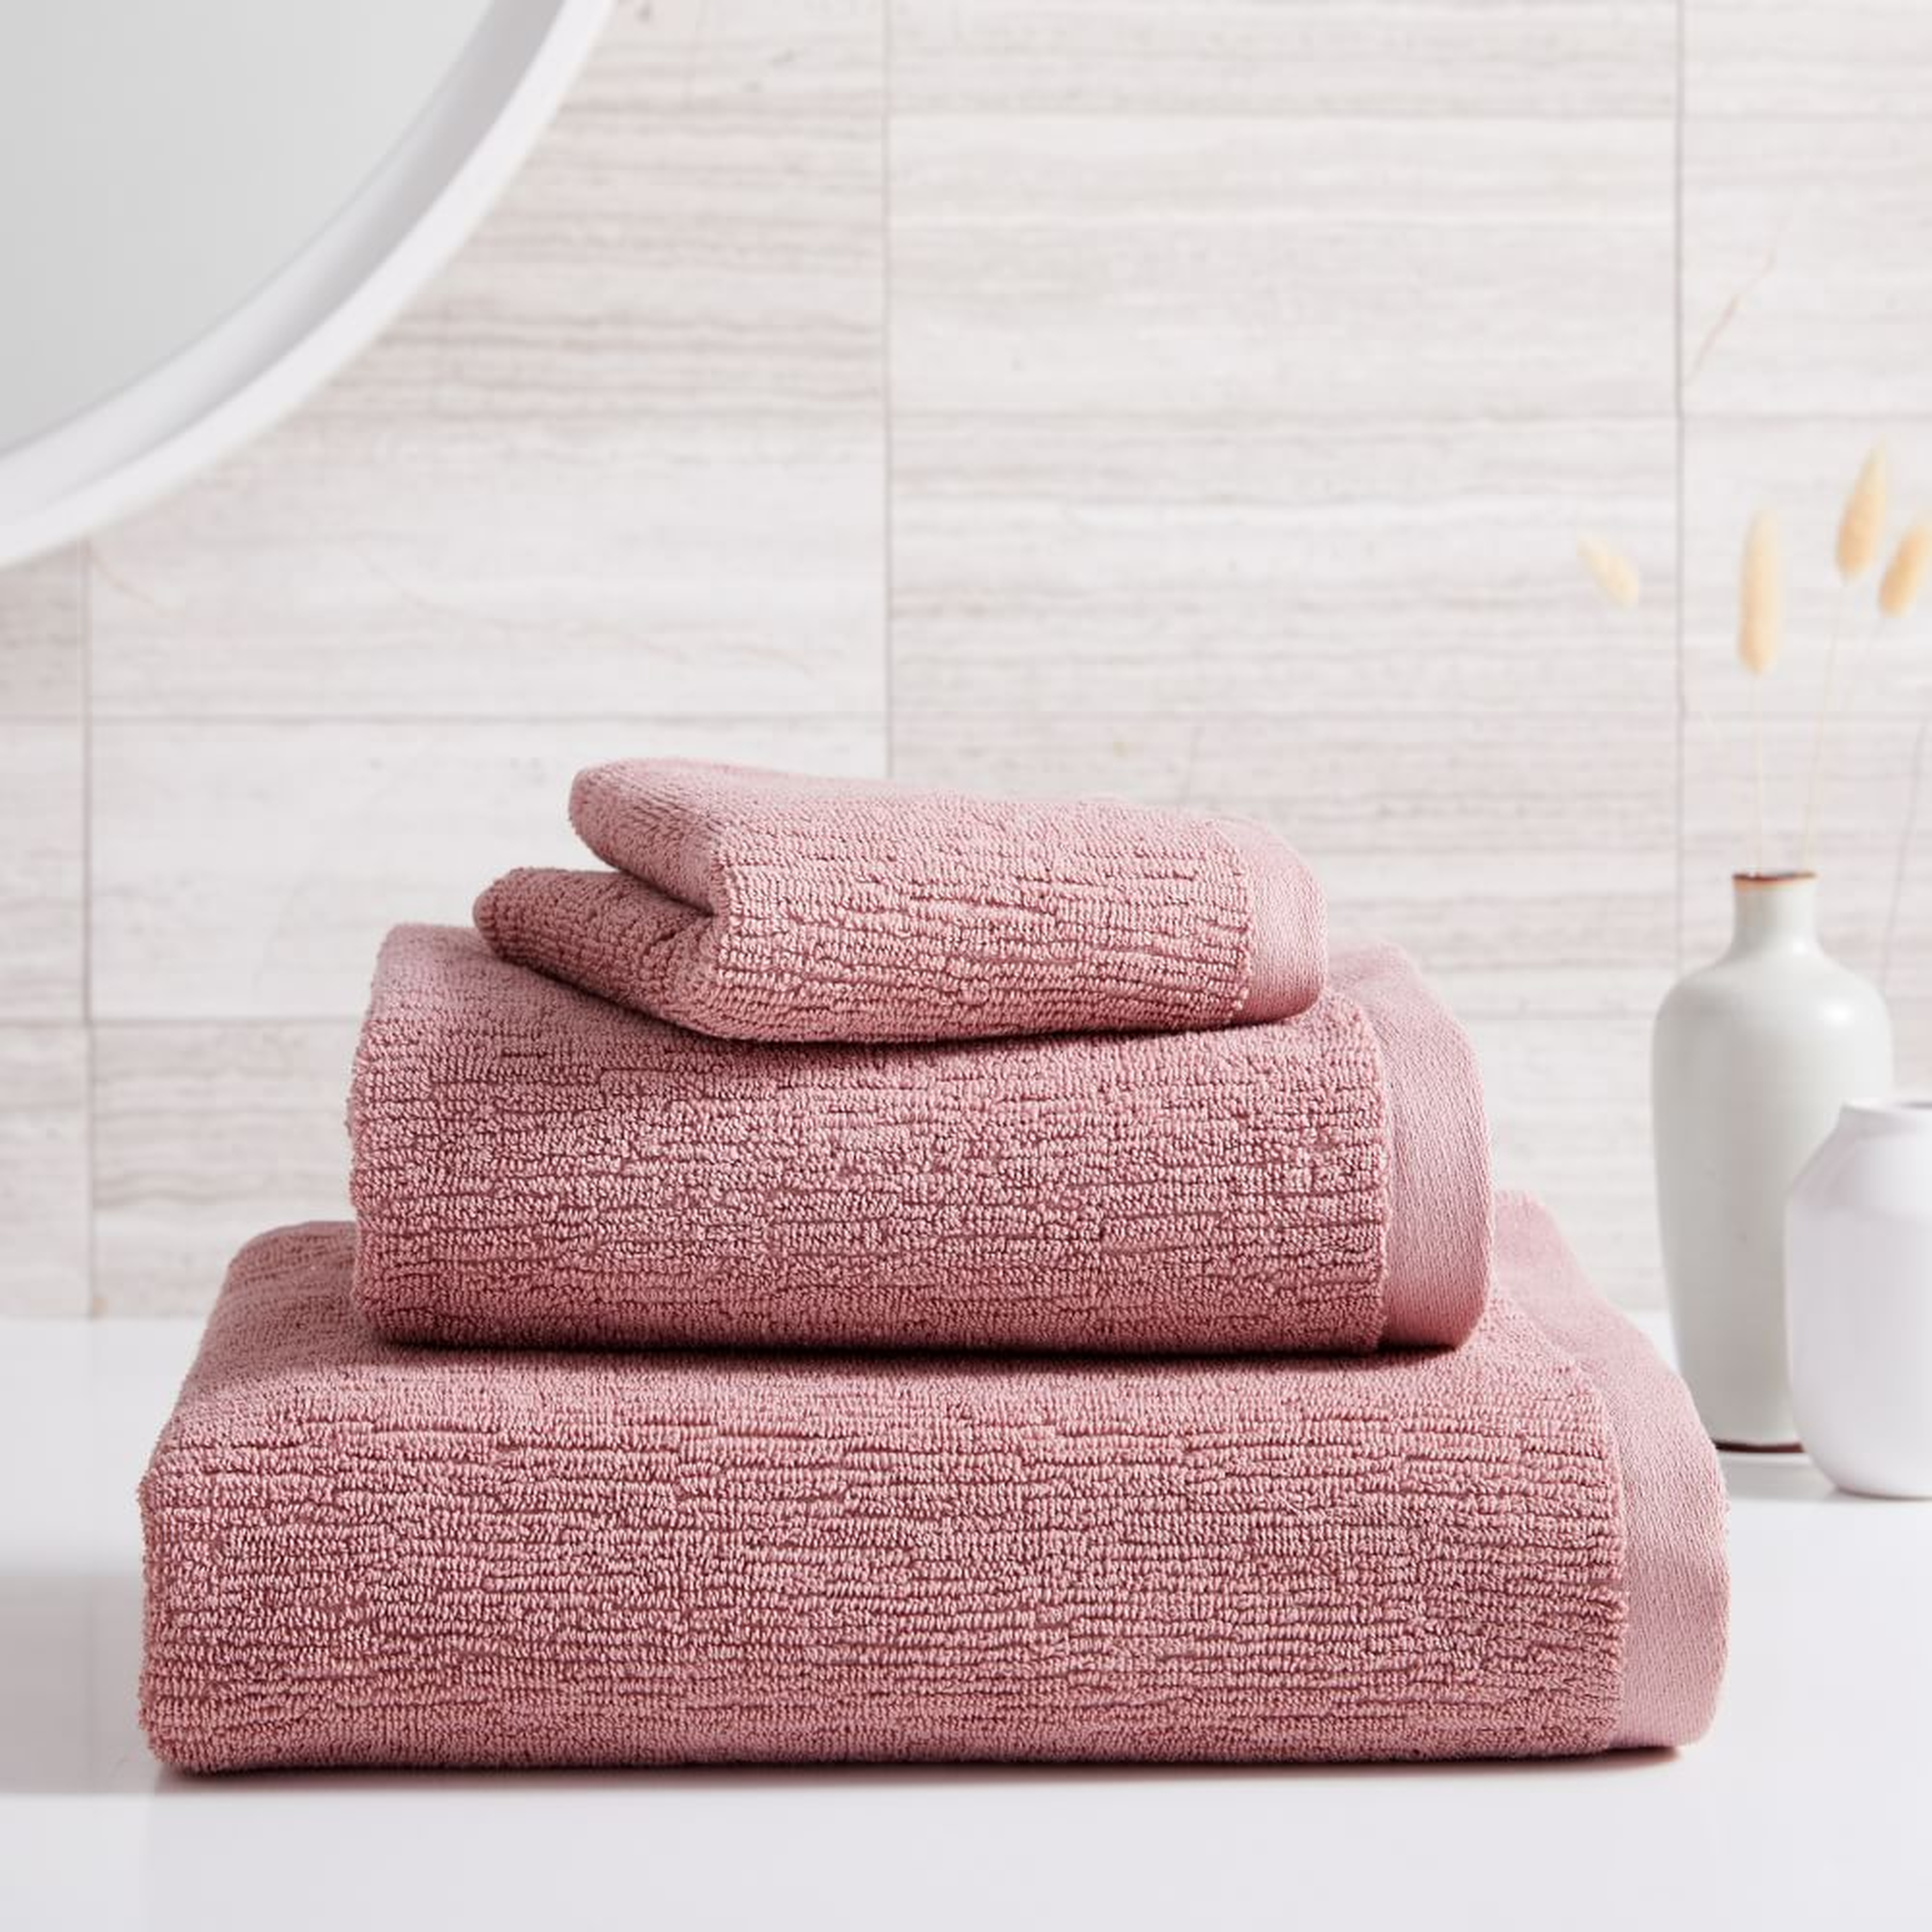 Textured Towel Set of 3 Pink Stone - West Elm